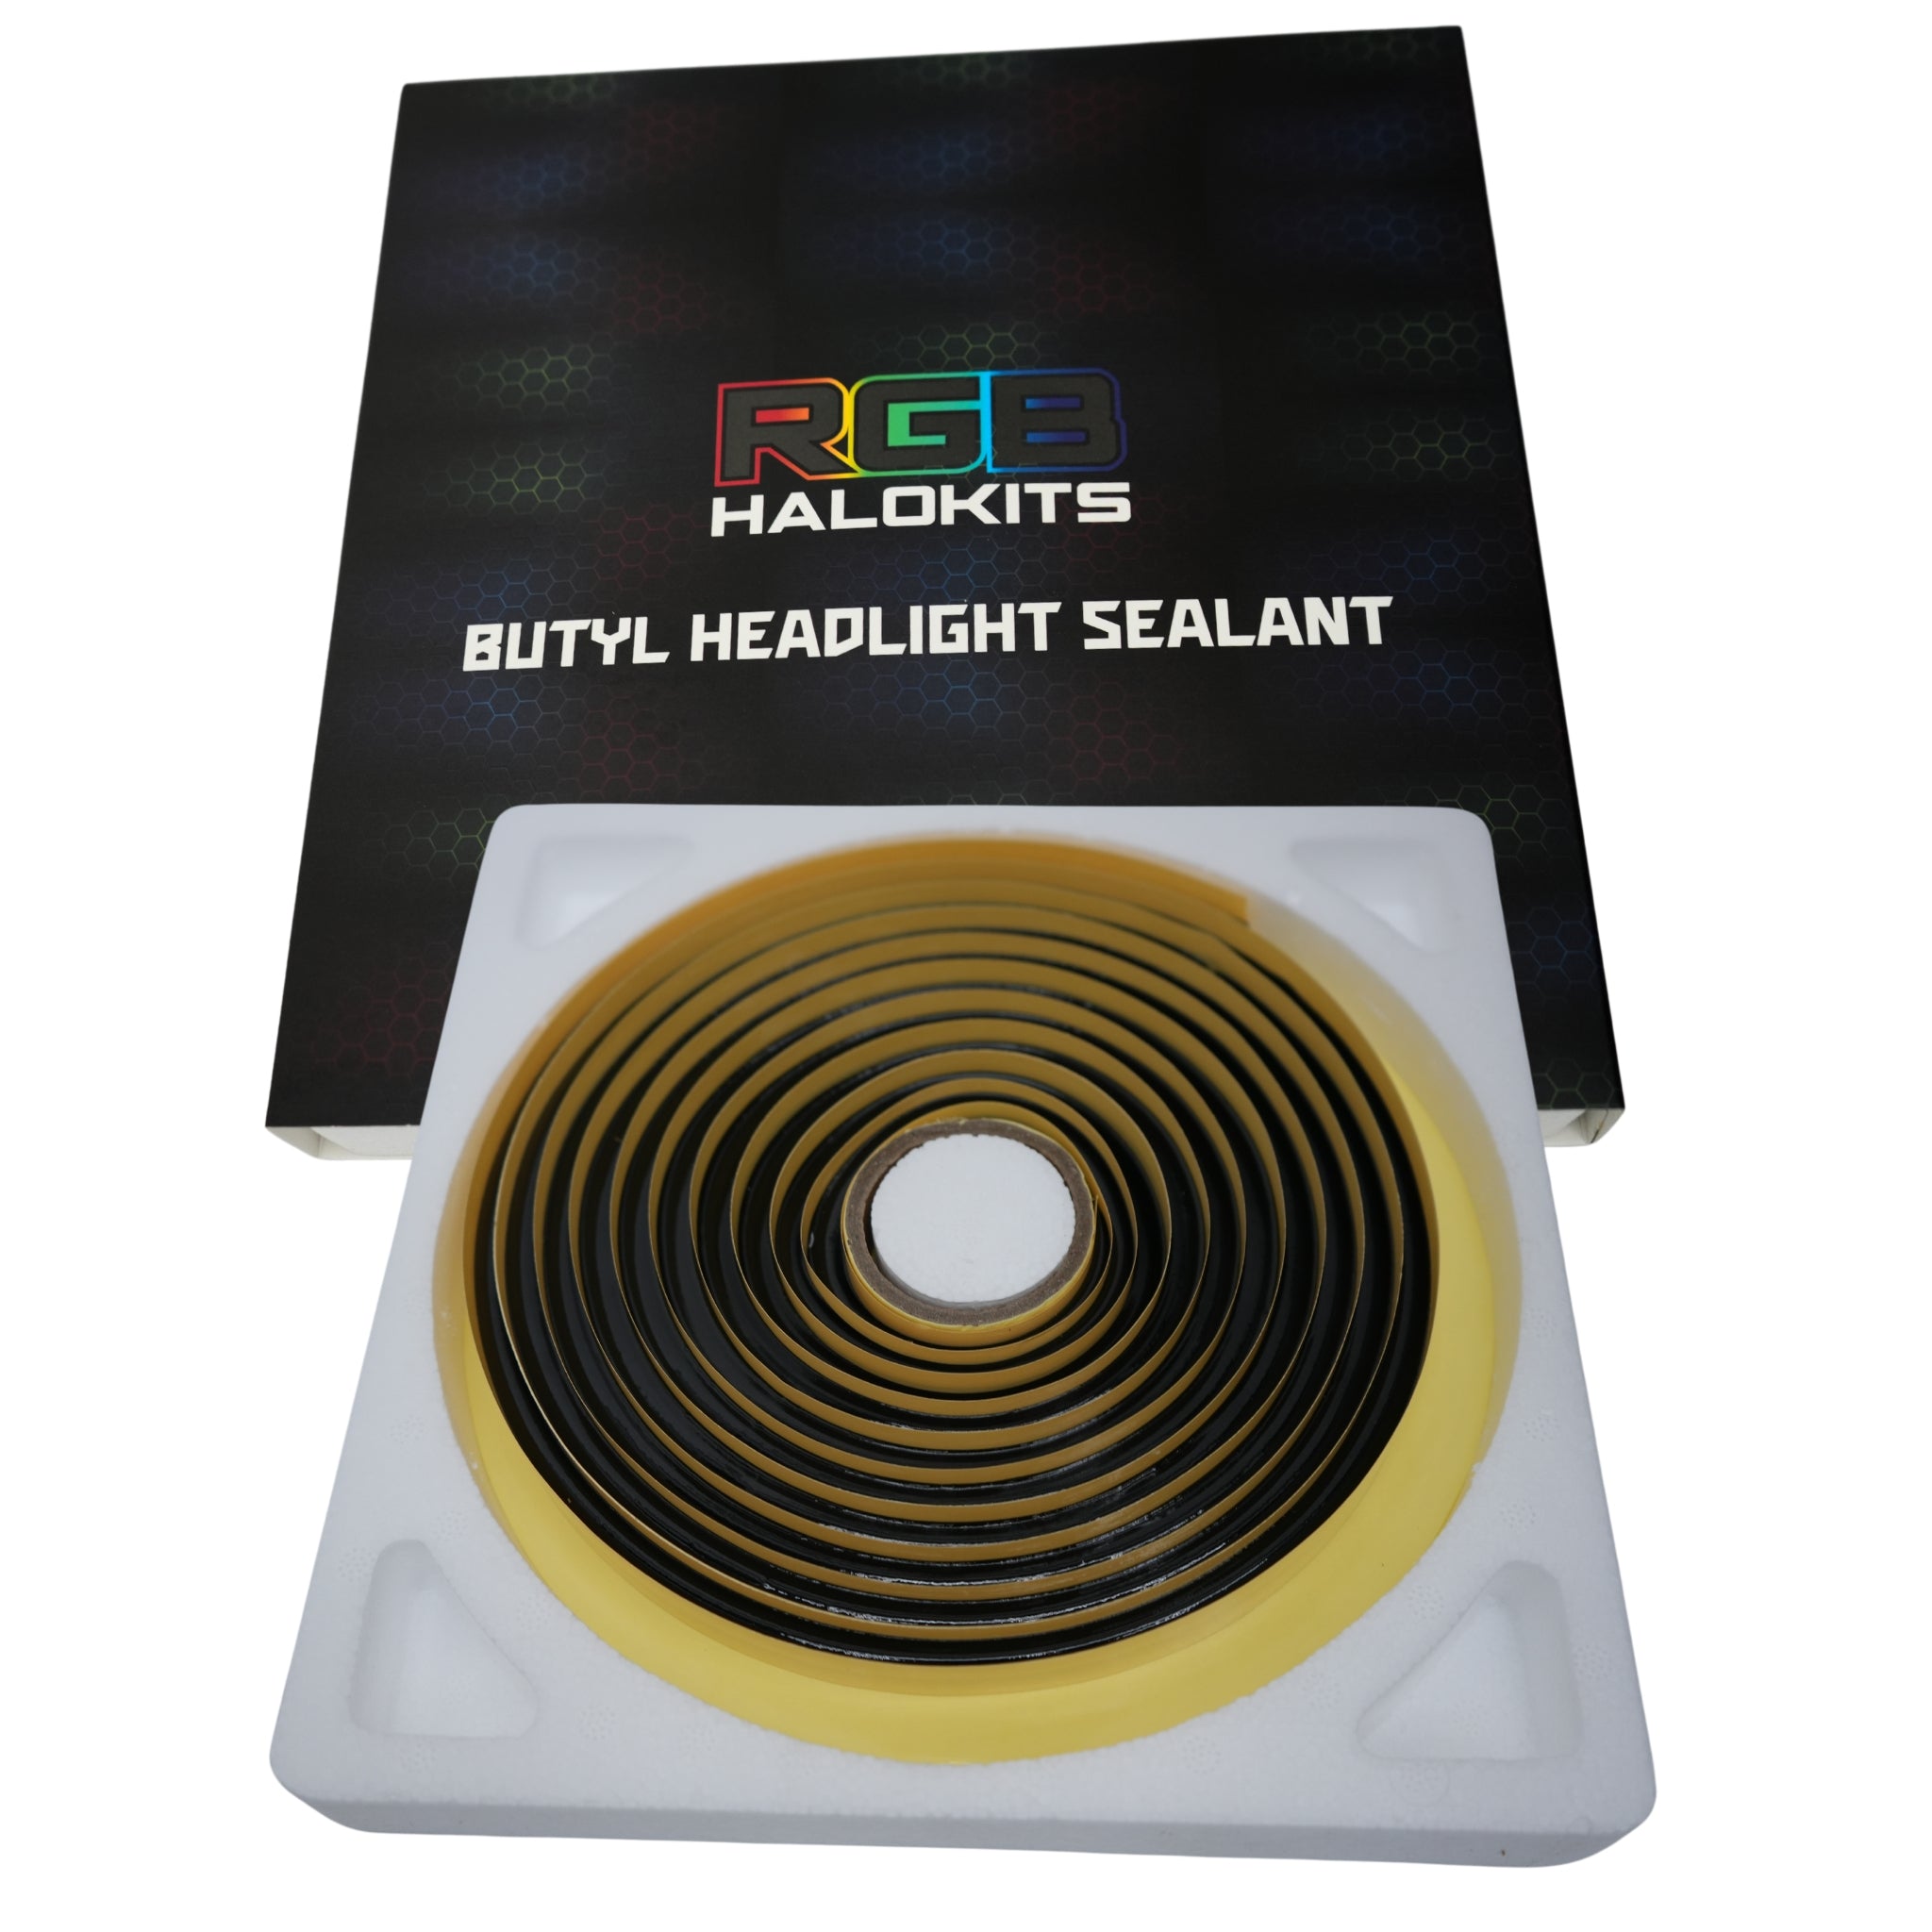 Butyl headlight resealing Rubber sealant